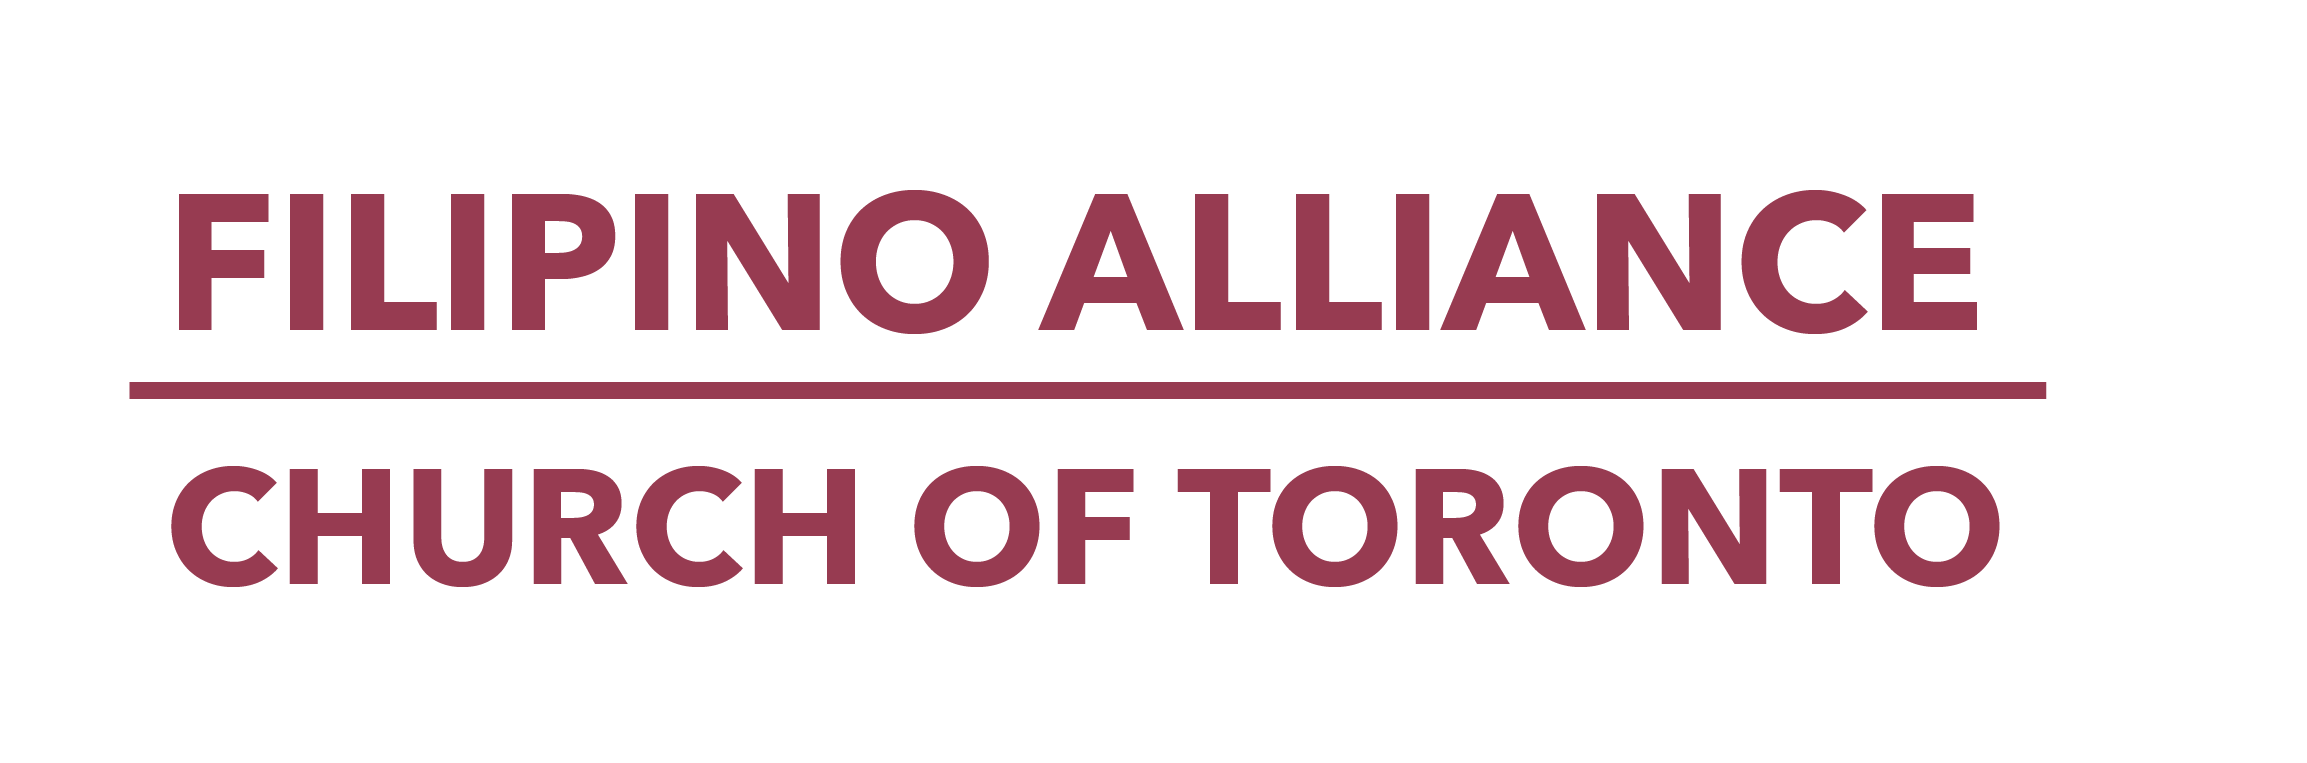 Filipino Alliance Church of Toronto